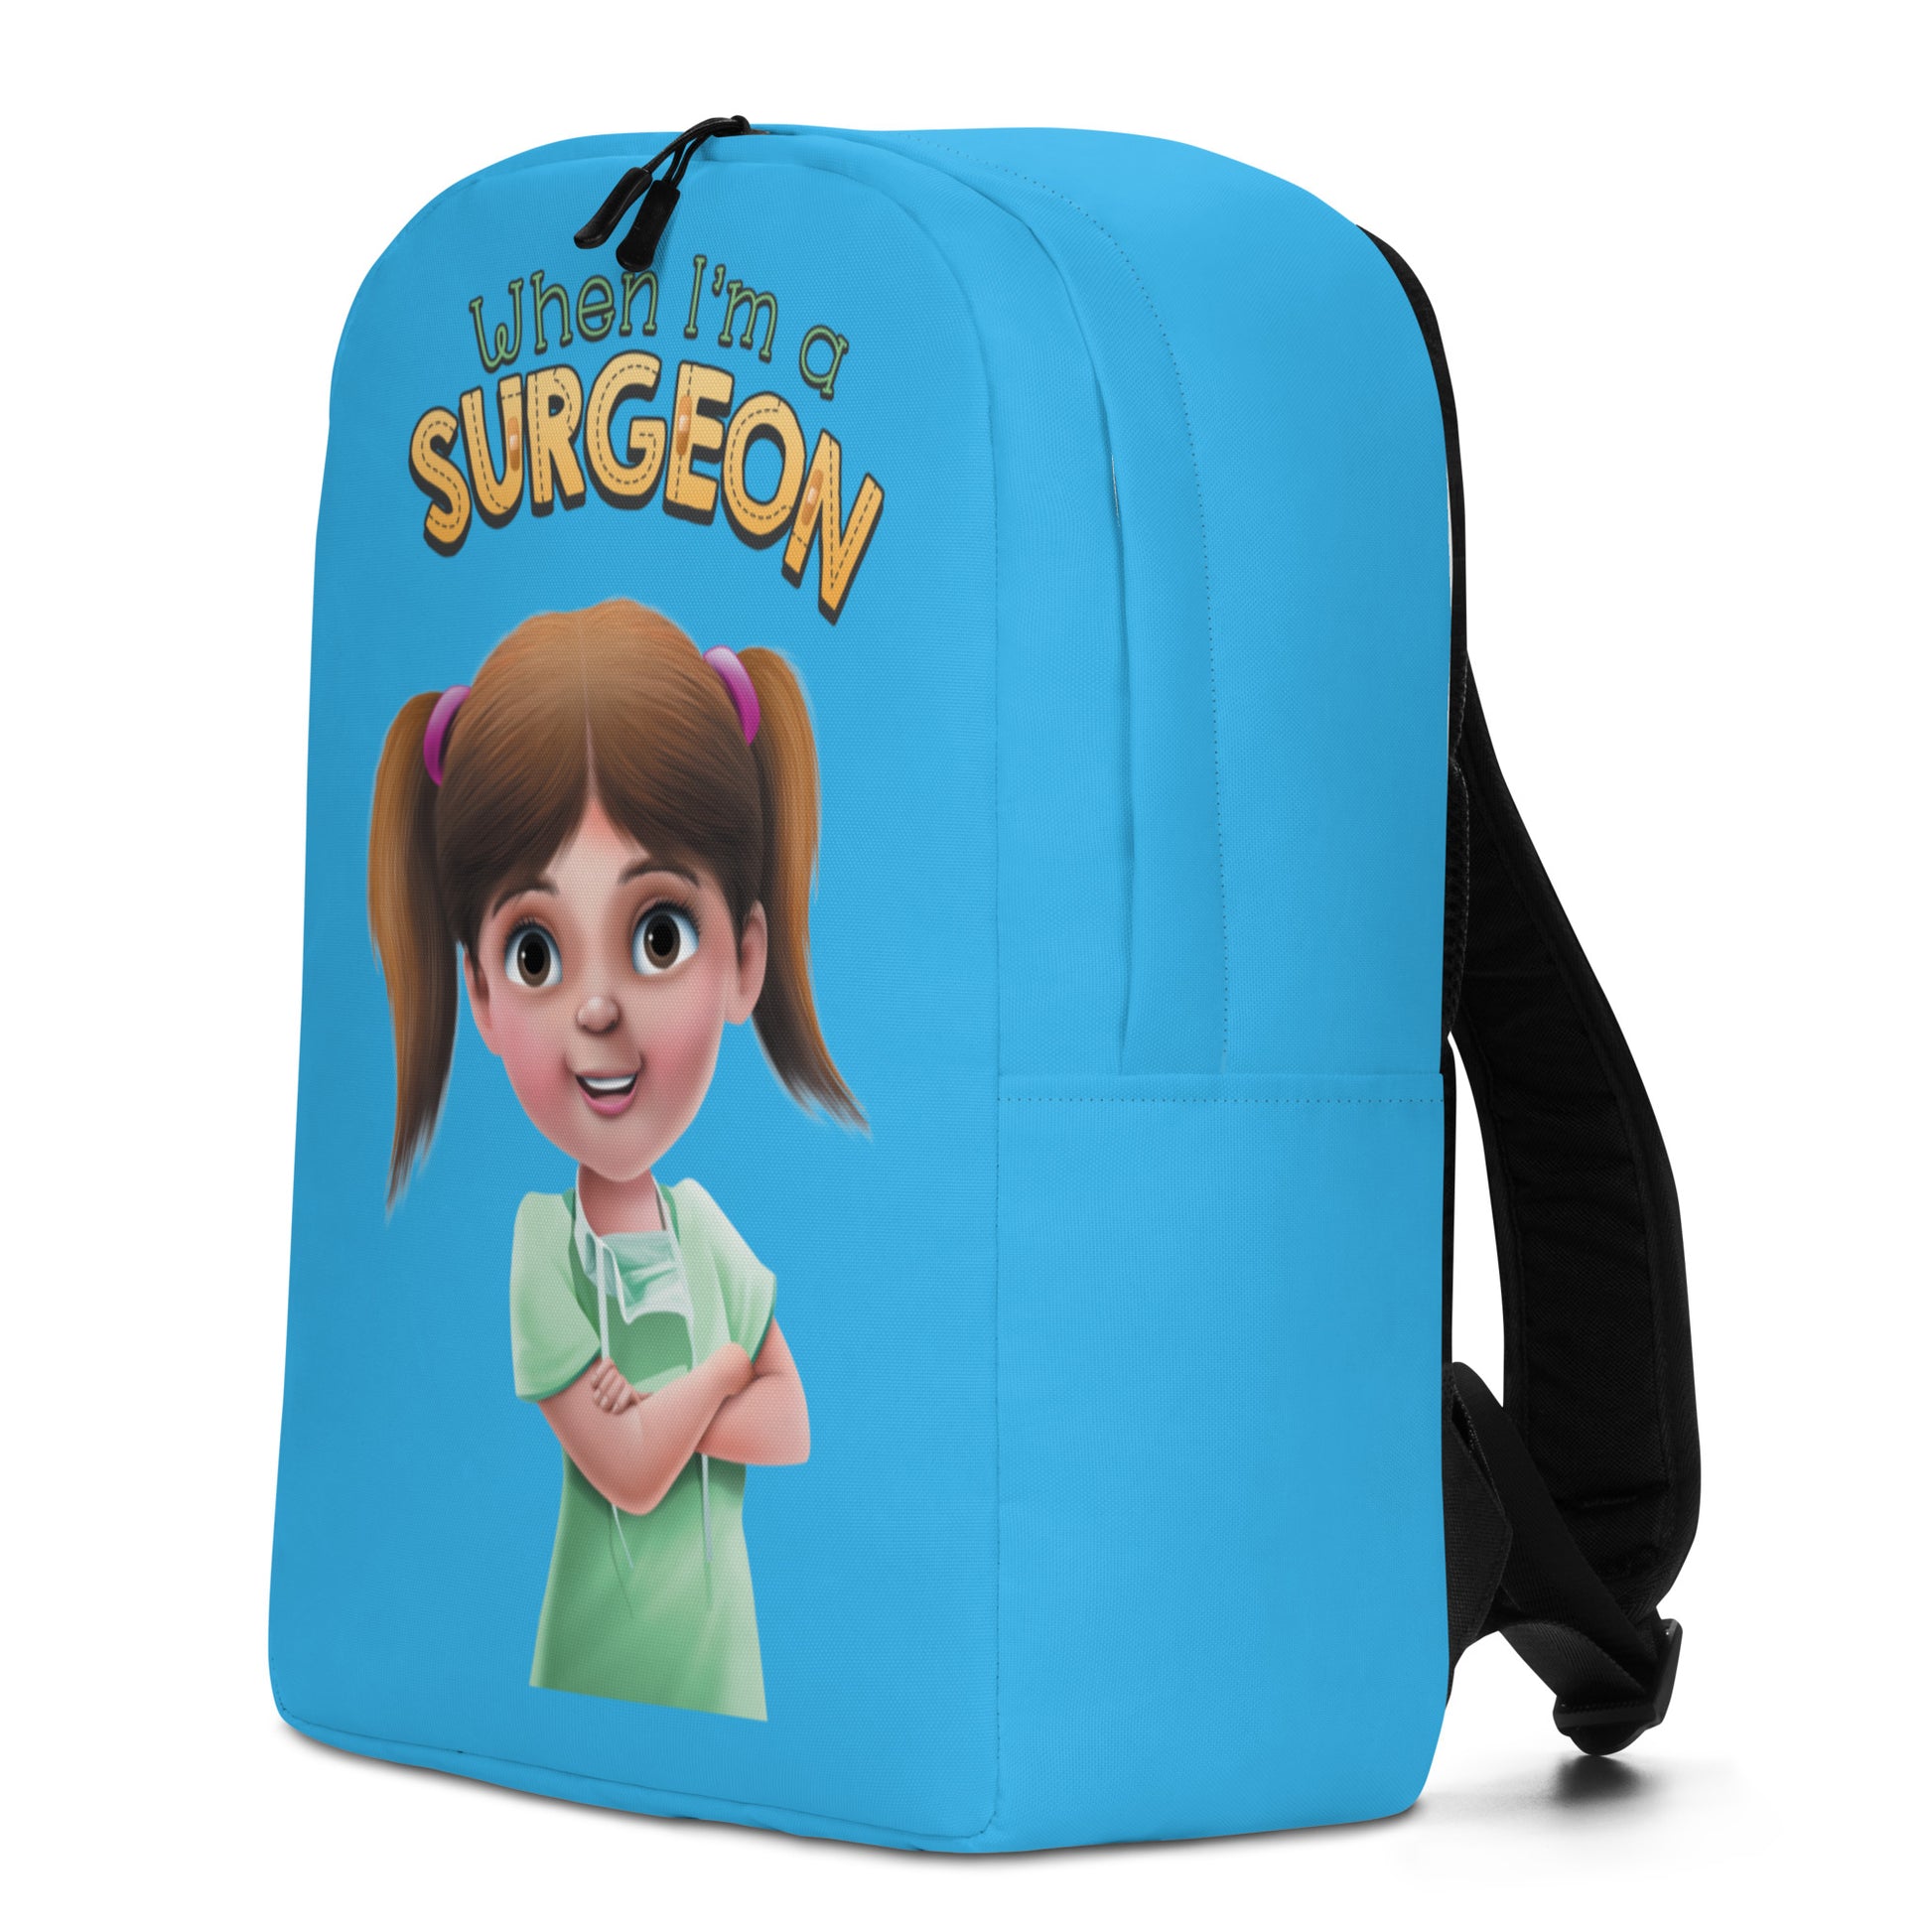 The best-seller smart STEM girl backpack for aspiring surgeons or doctors.